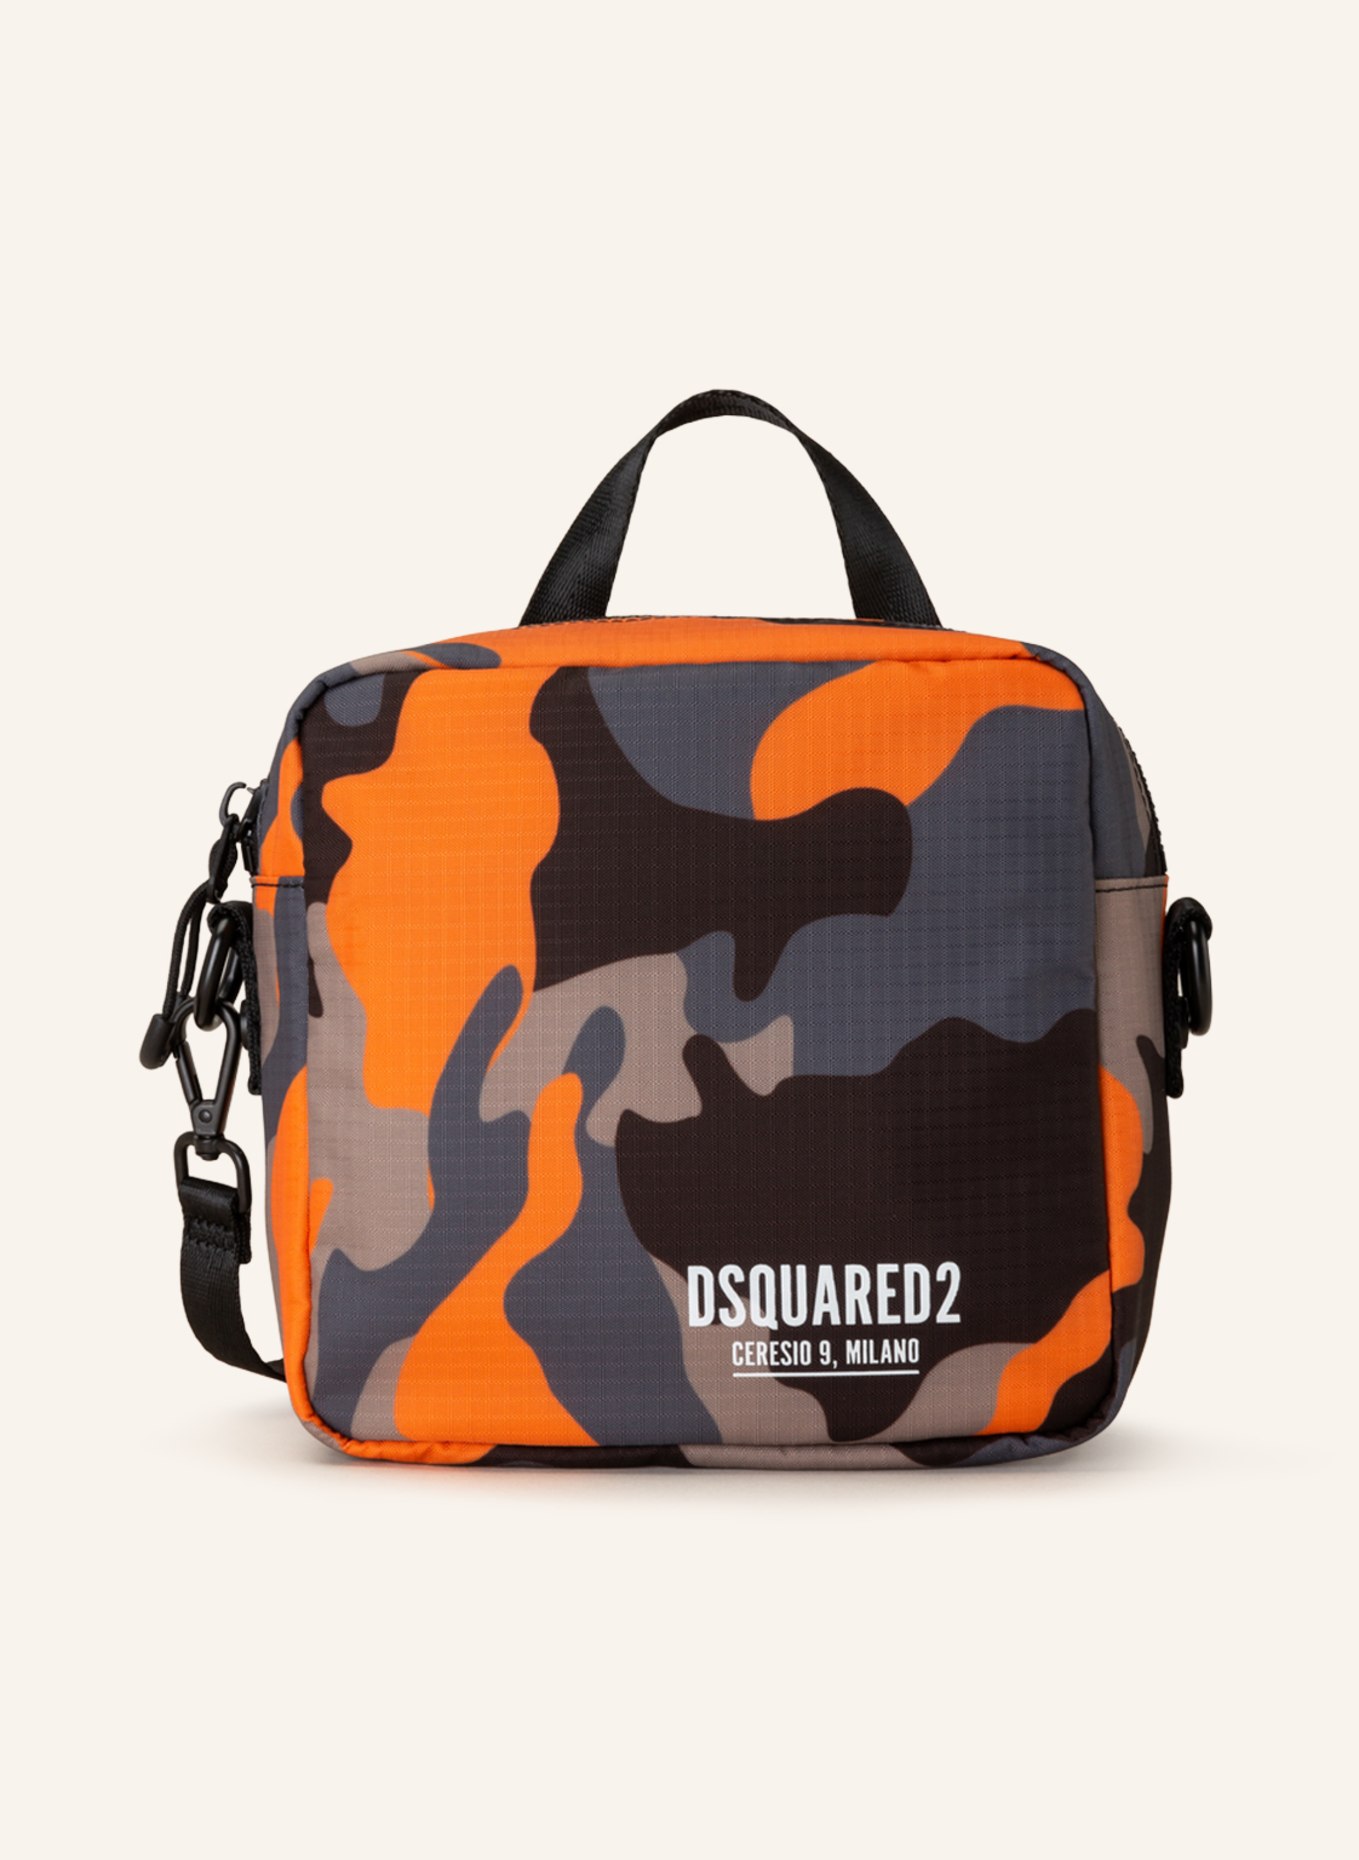 DSQUARED2 Shoulder bag CERESIO 9, Color: ORANGE/ DARK GRAY/ BLACK (Image 1)